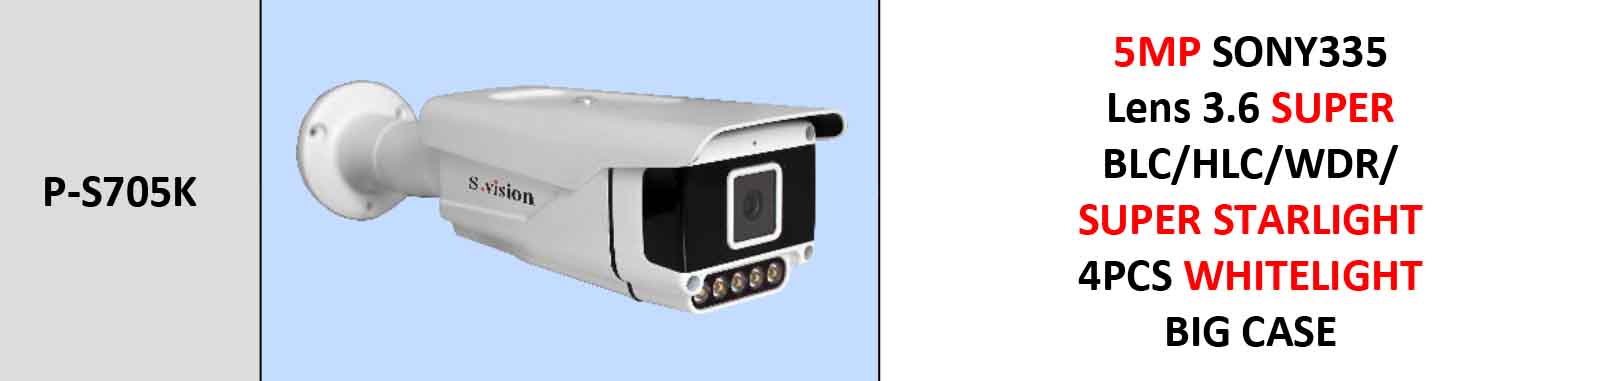 مشخصات دوربین مداربسته بولت اس ویژن مدل Svision P-S705K 